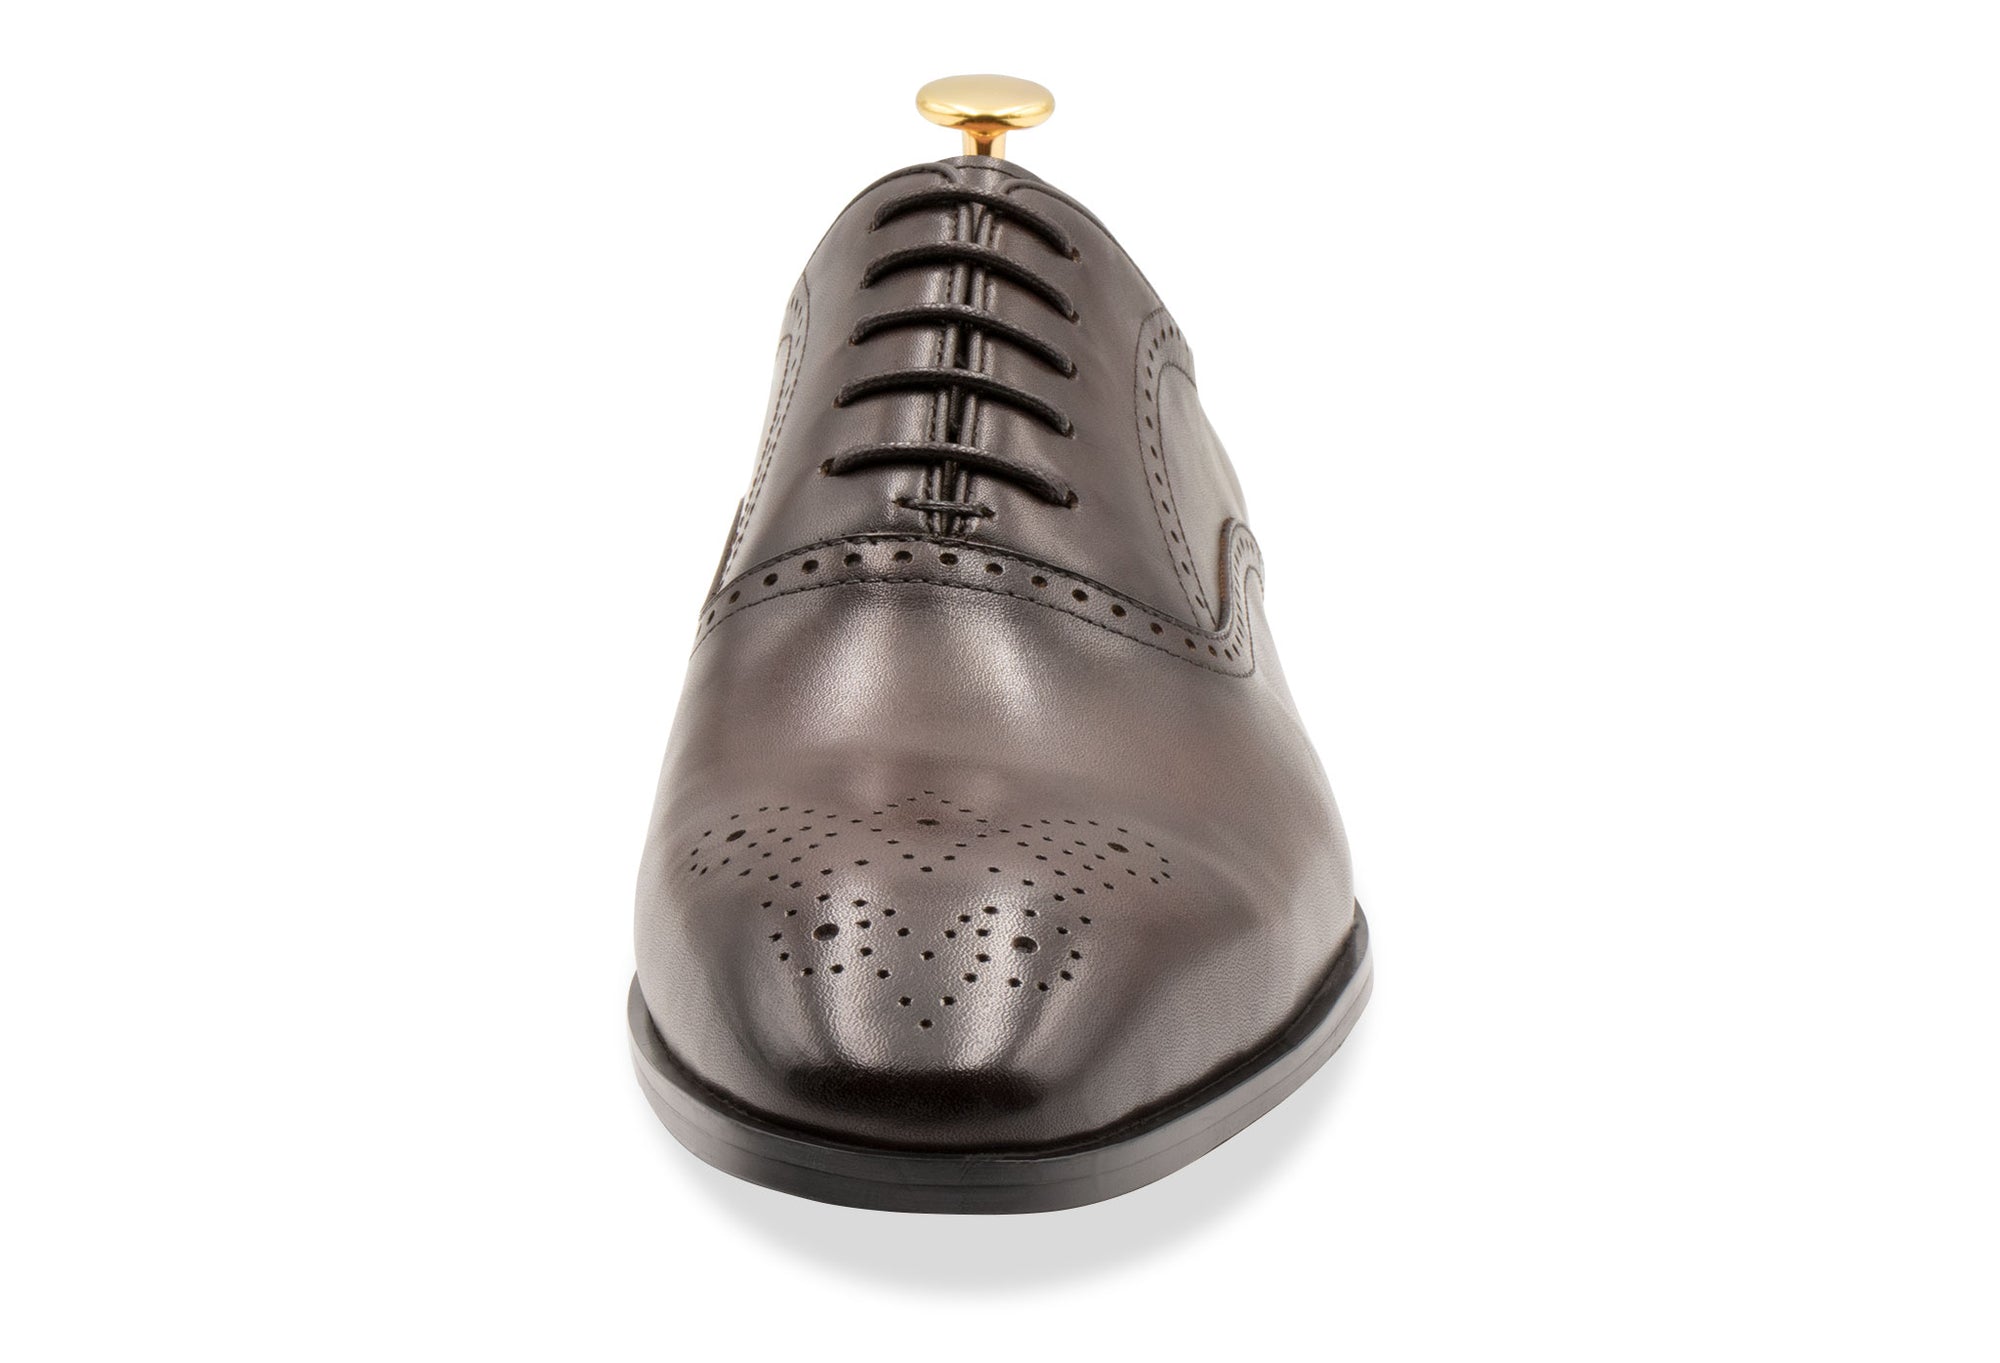 Mendoza Medallion Walnut Oxford Leather Shoes